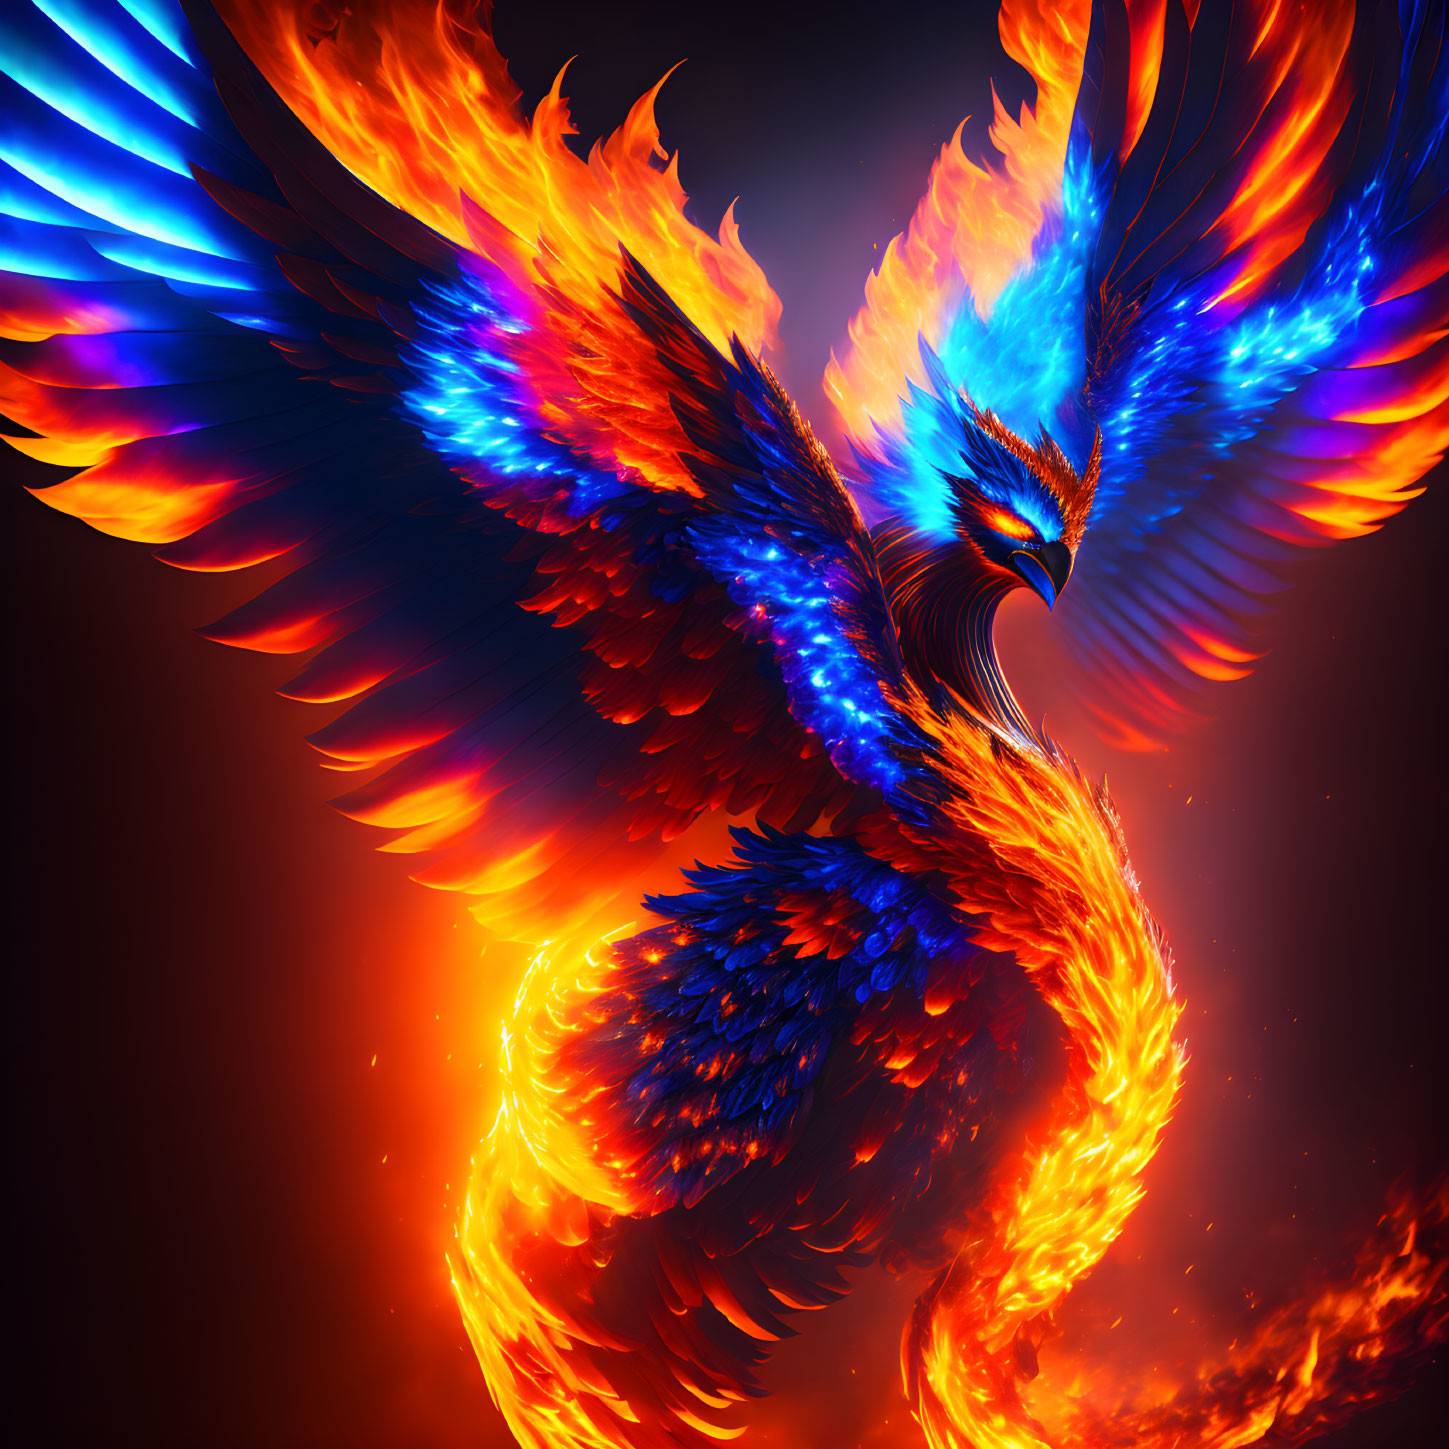 The Rising Phoenix